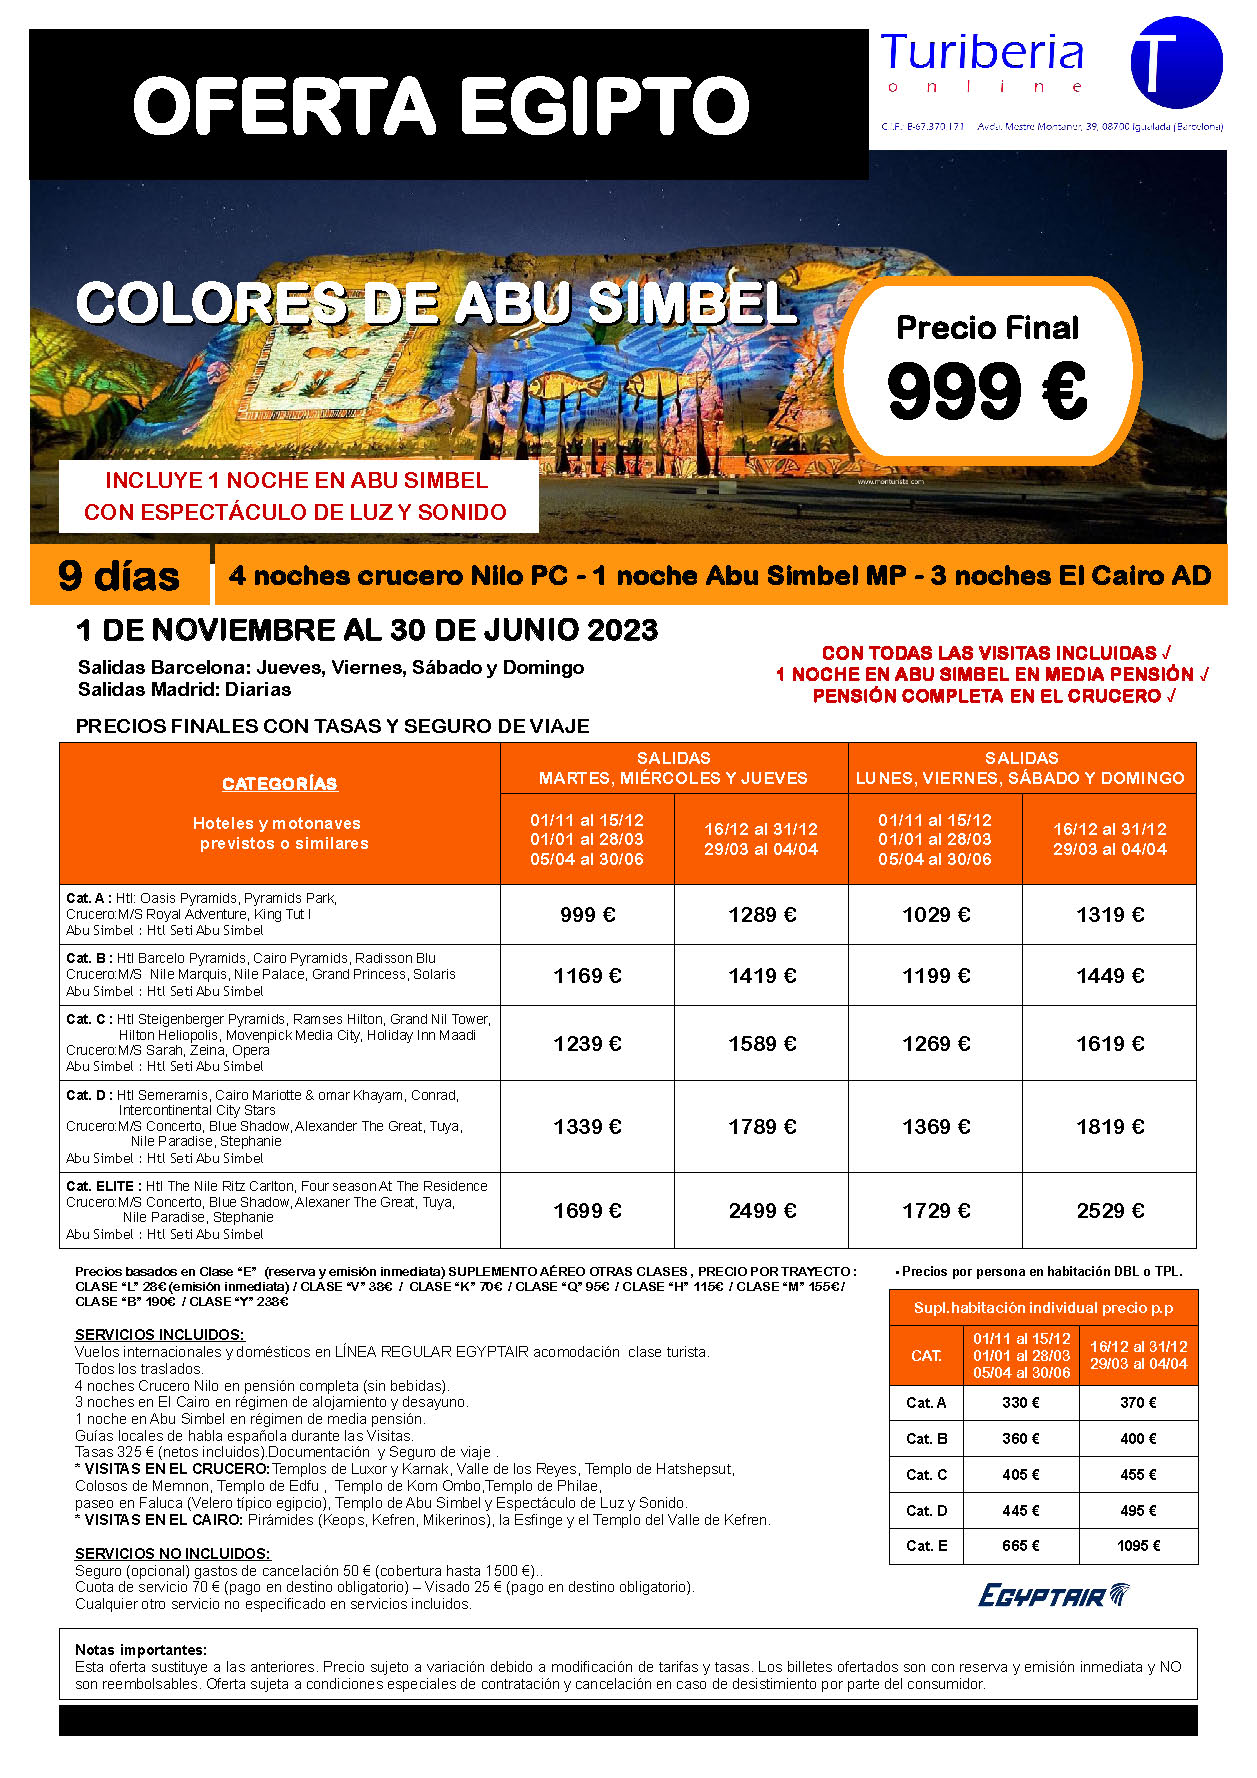 Ofertas Turiberia 2023 Egipto Colores de Abu Simbel 9 dias salida en vuelo regular directo desde Madrid